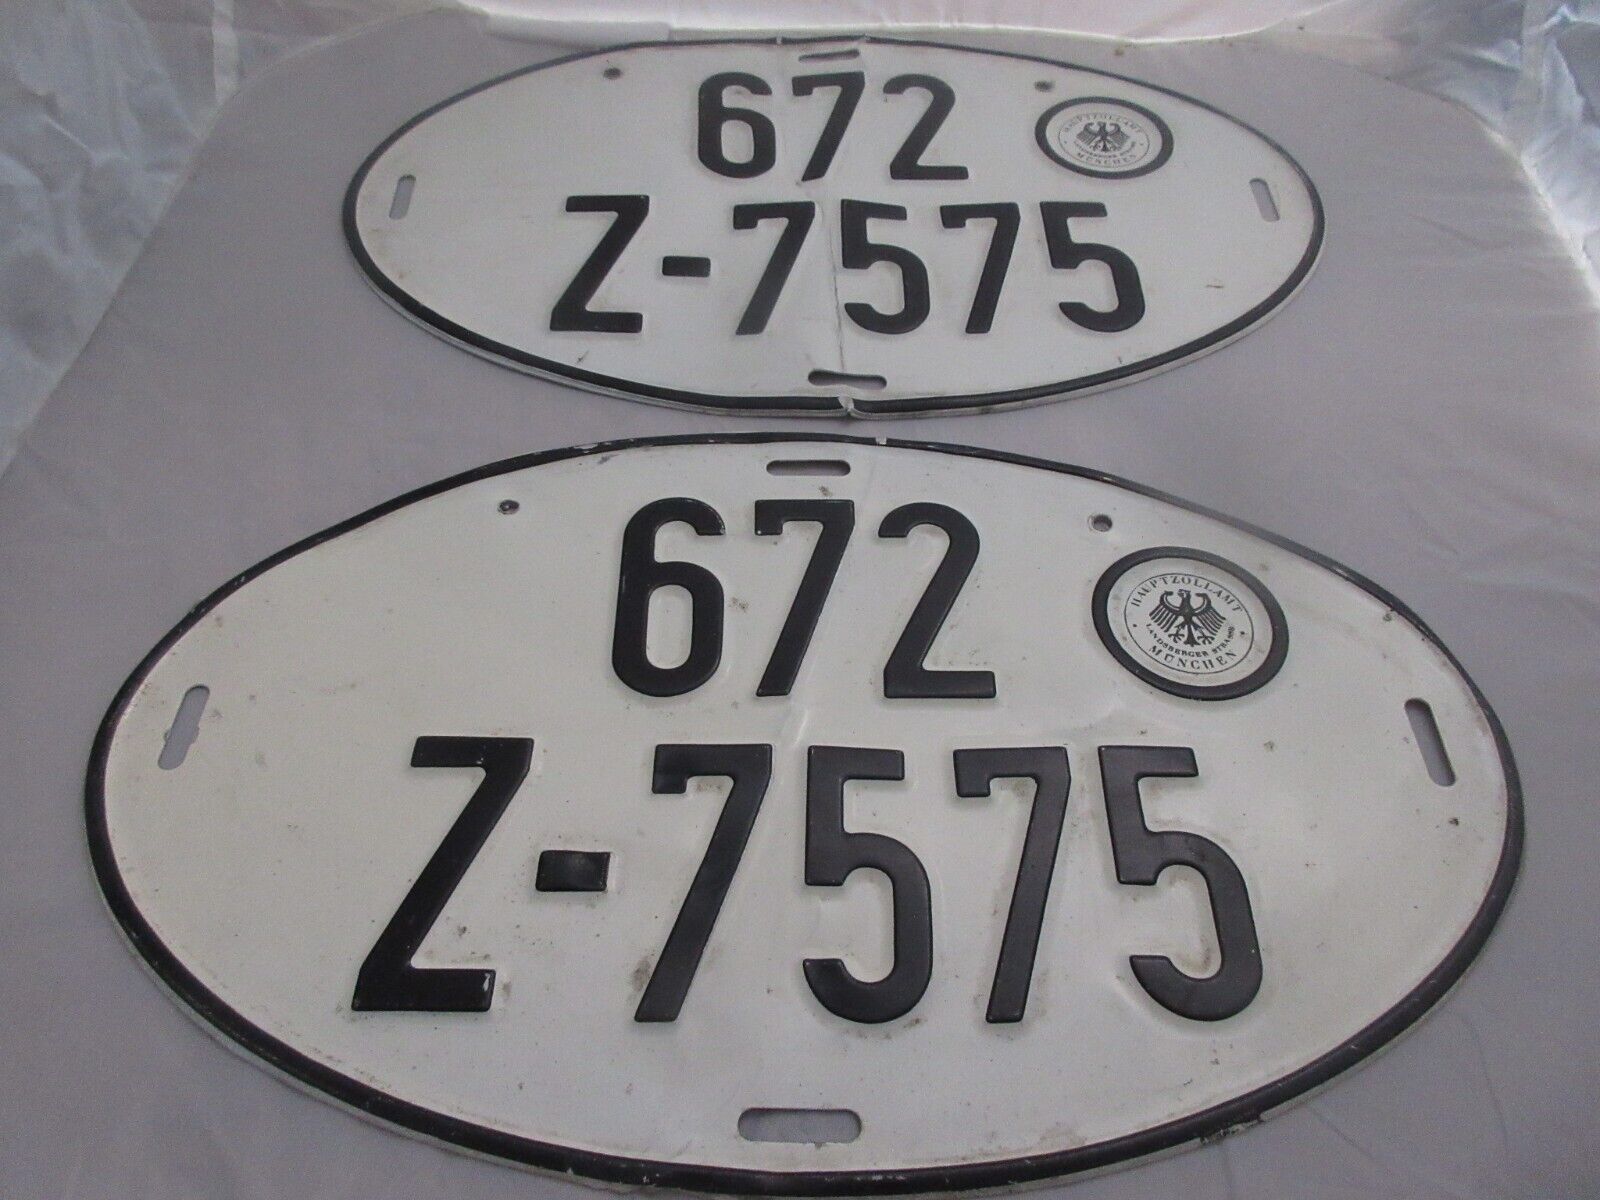 Set of 2 Duplicate Vintage West Germany Oval License Plates